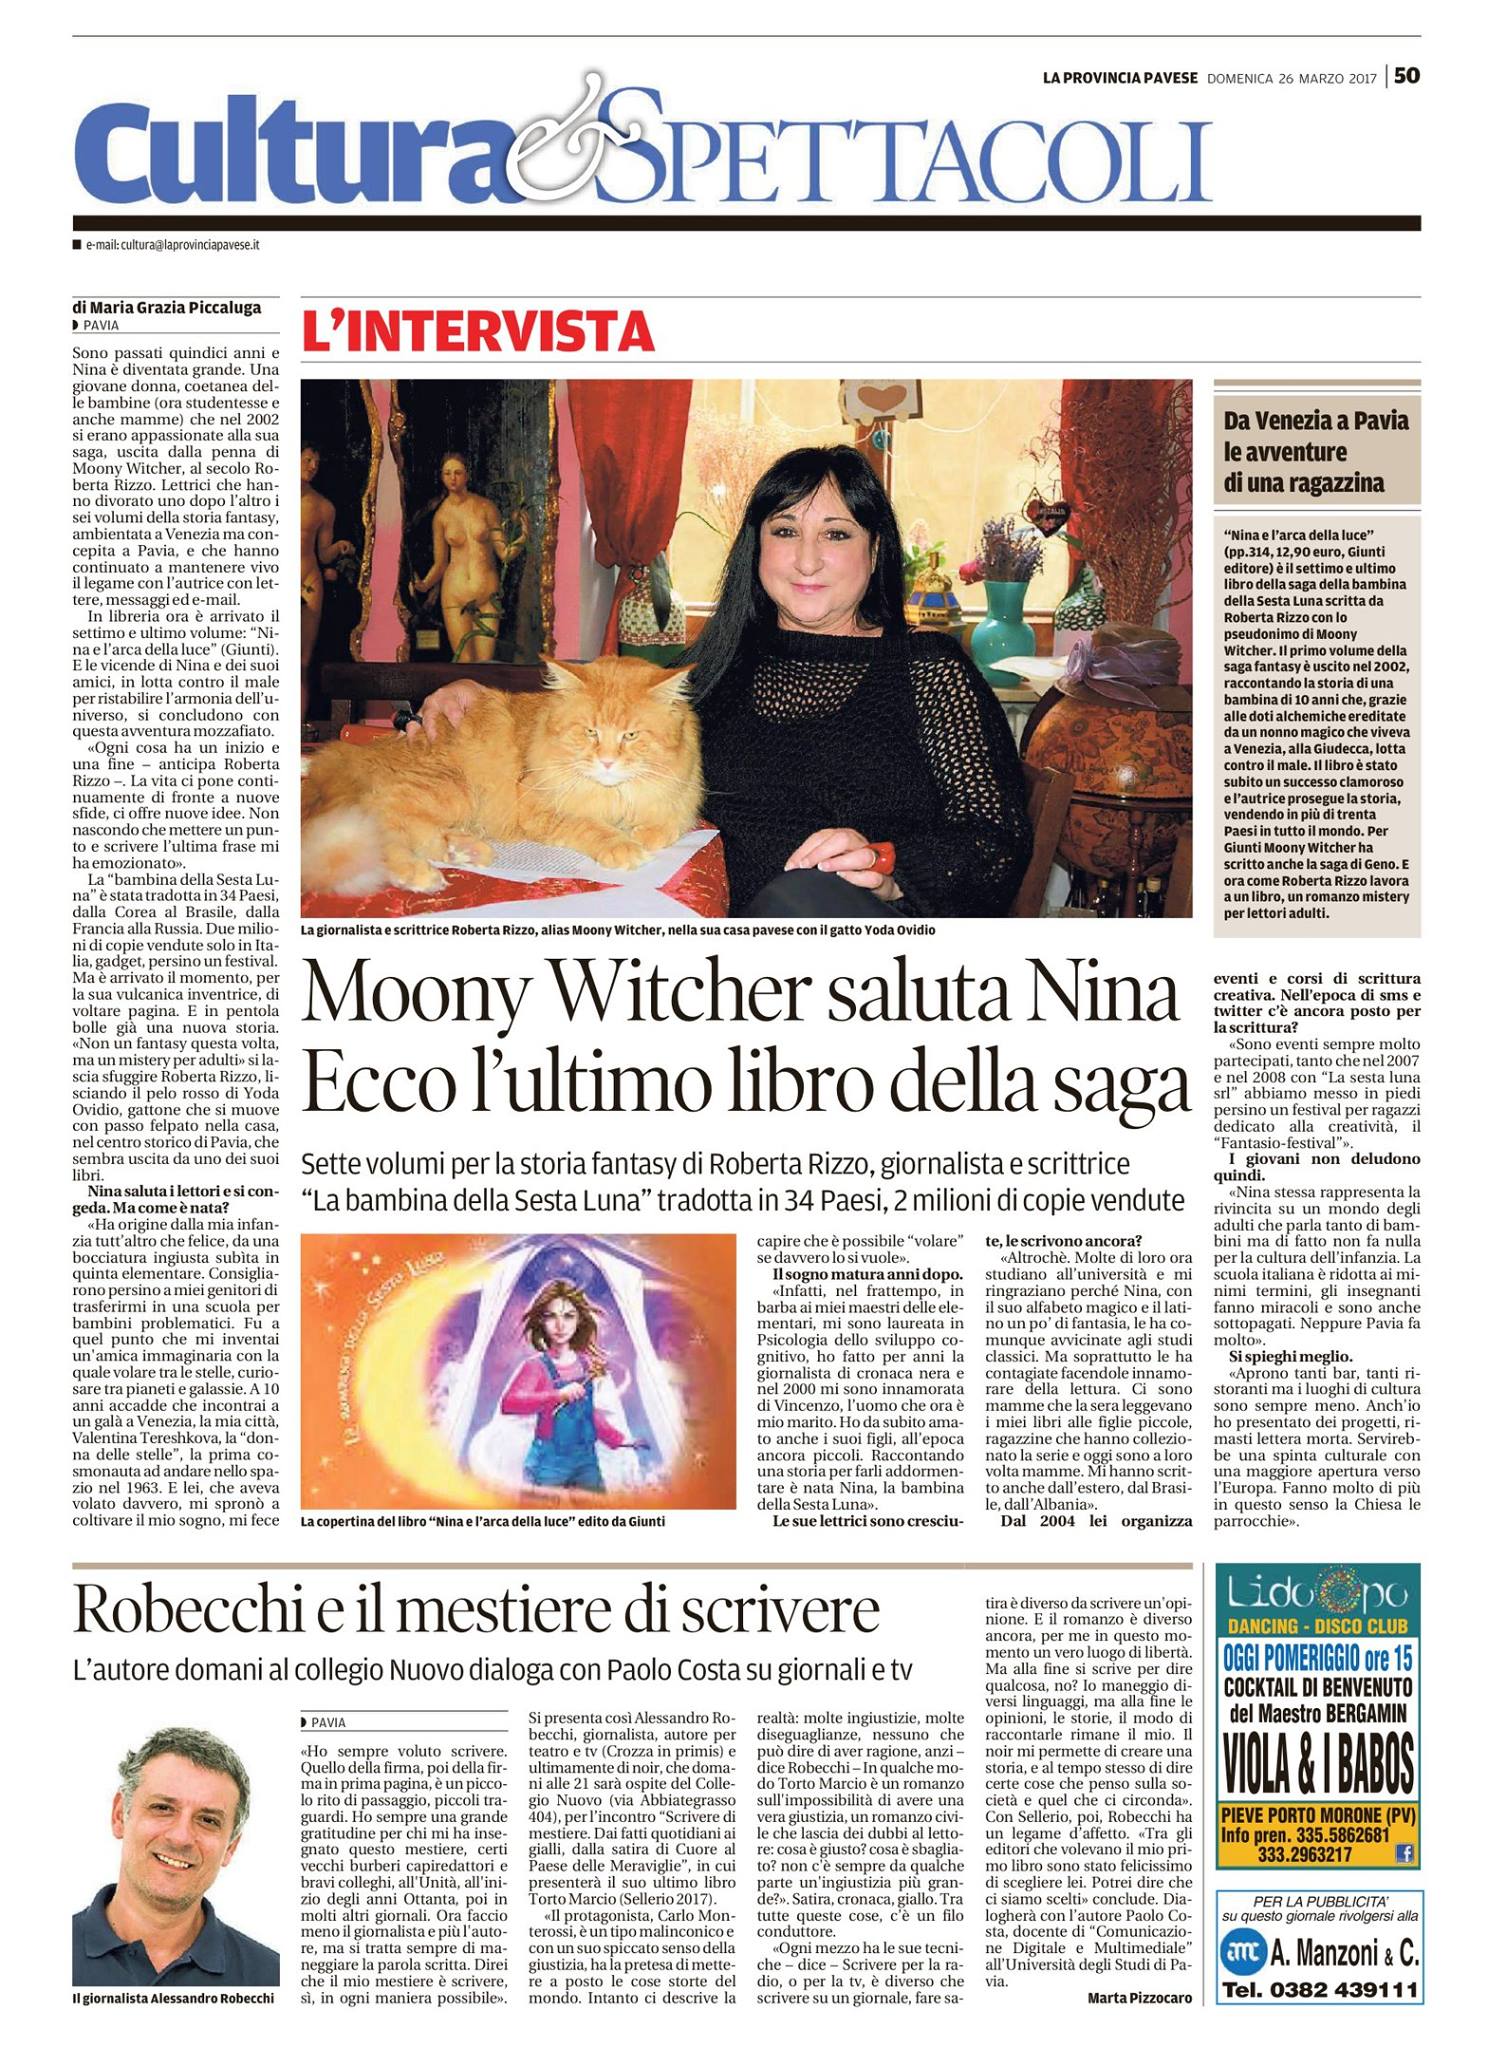 intervista a Moony Witcher su la Provincia Pavese